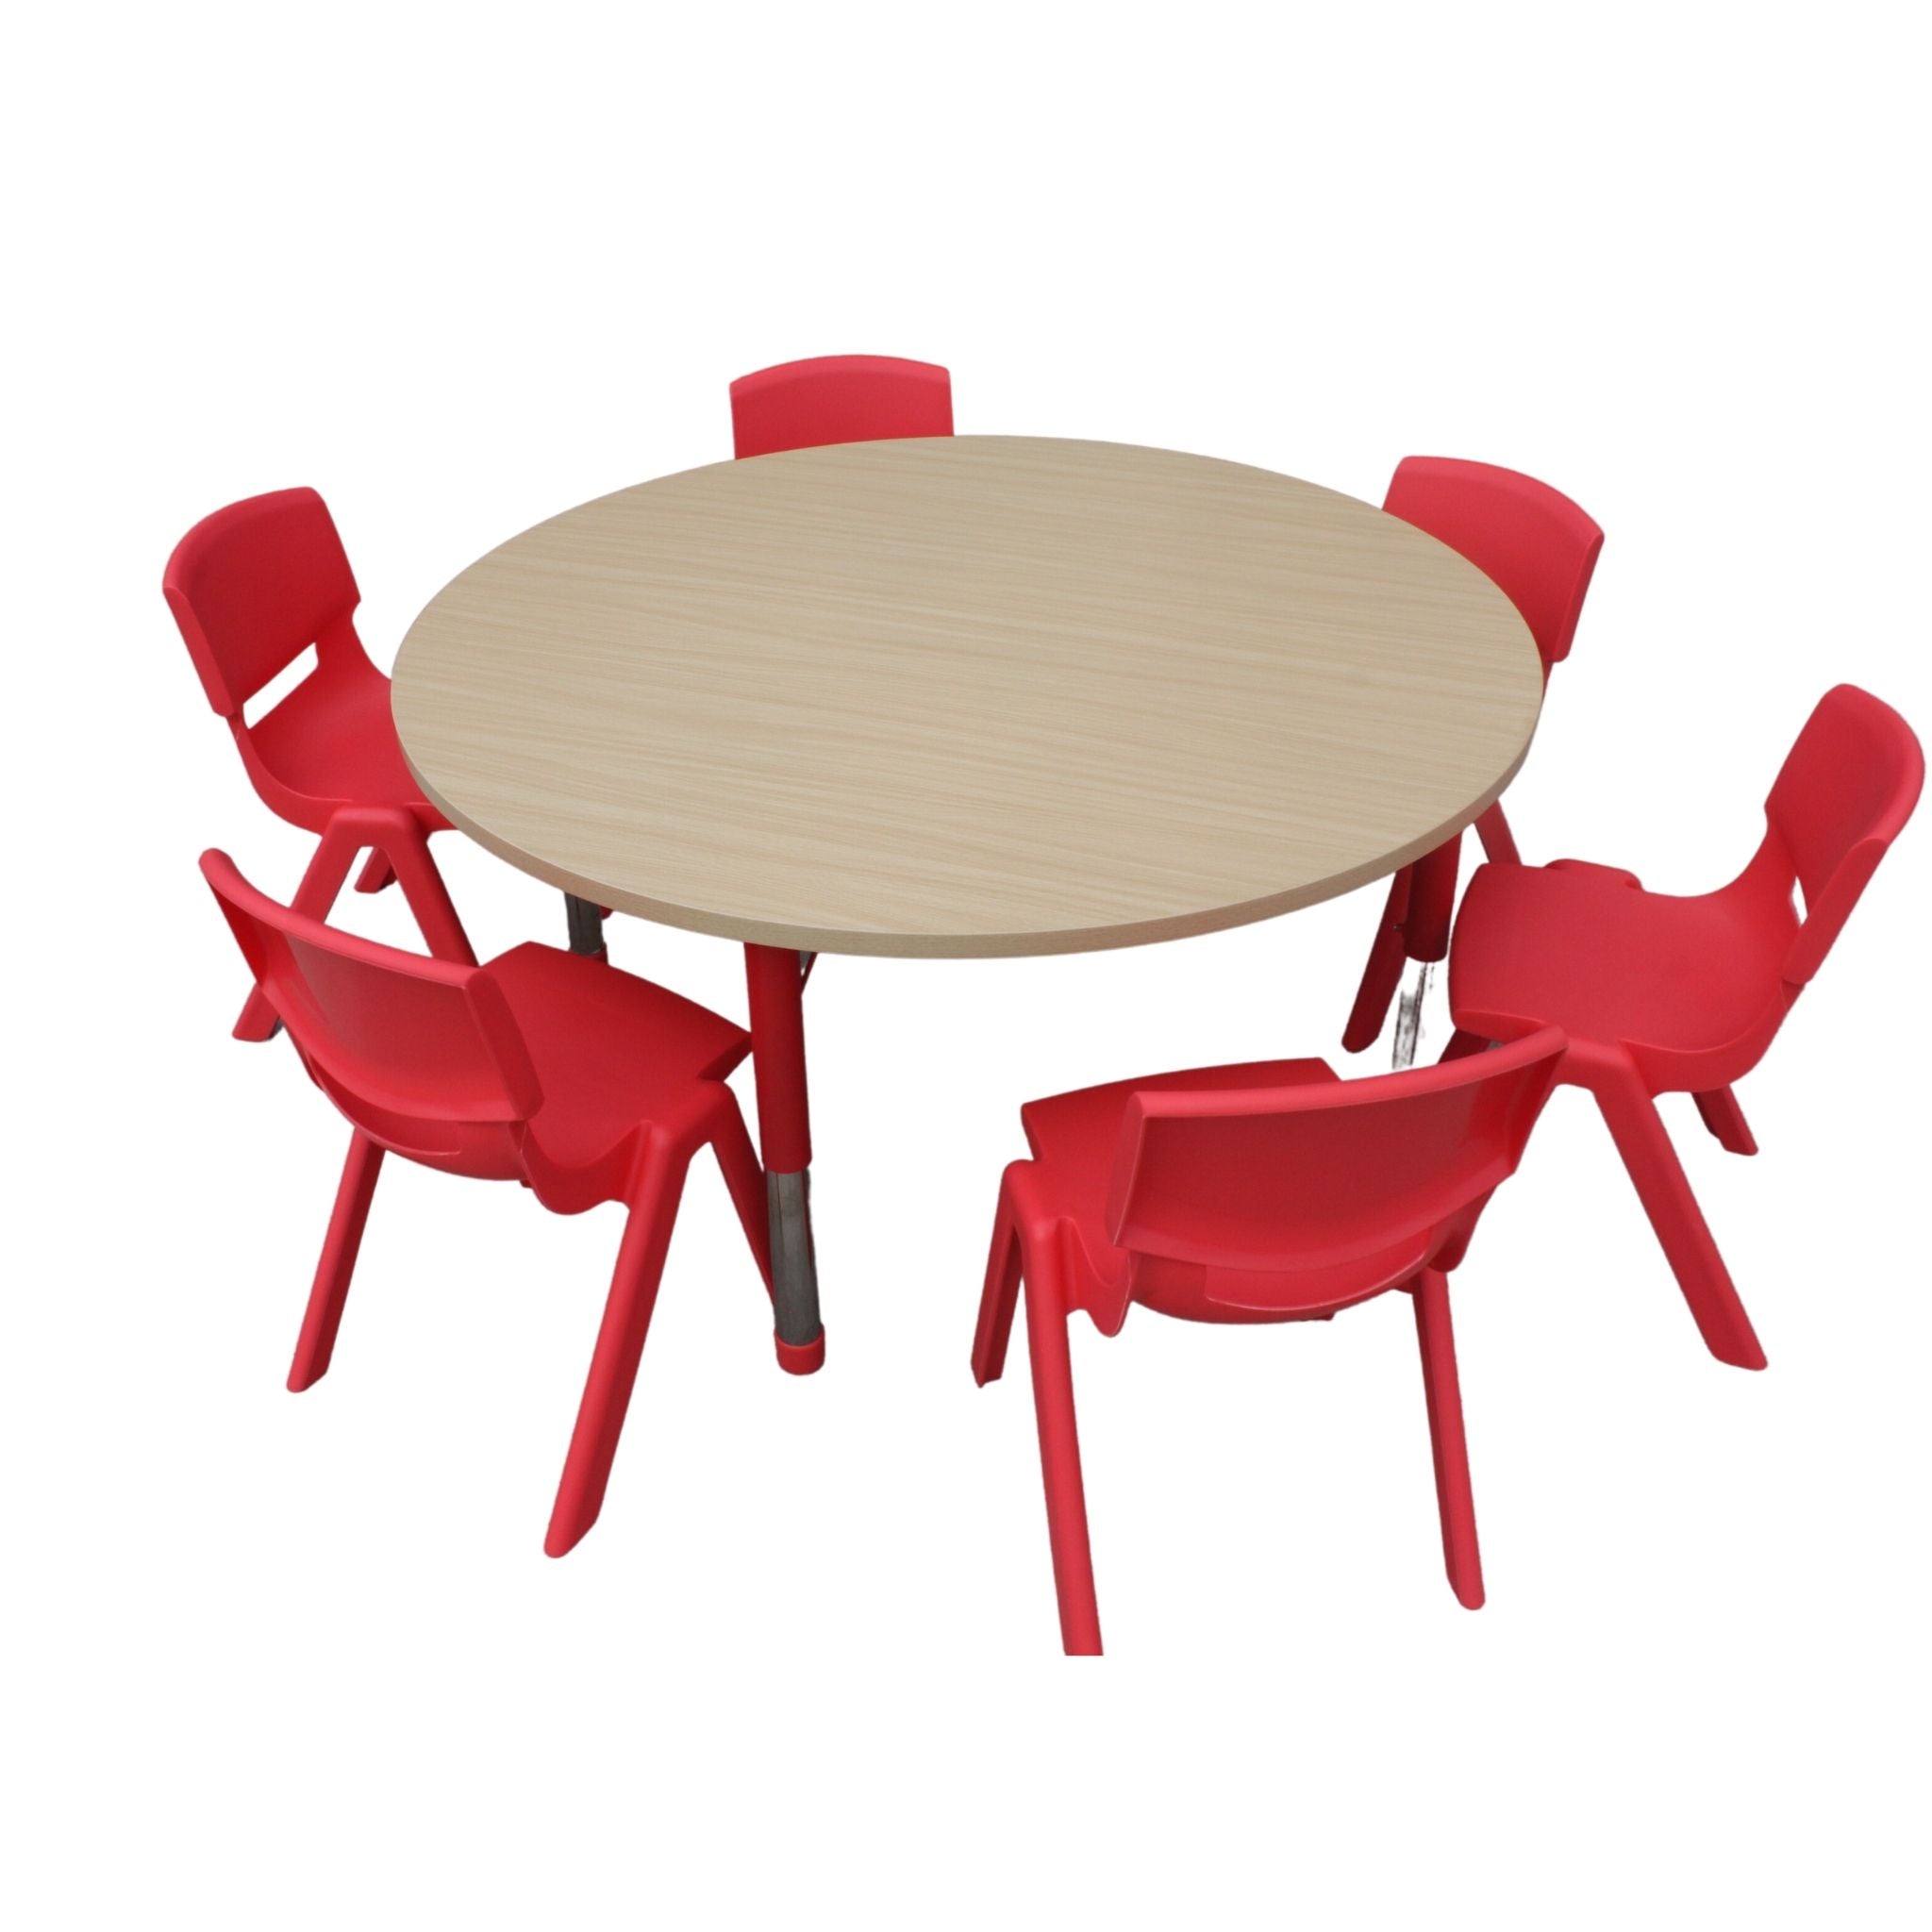 Adjustable Round Table